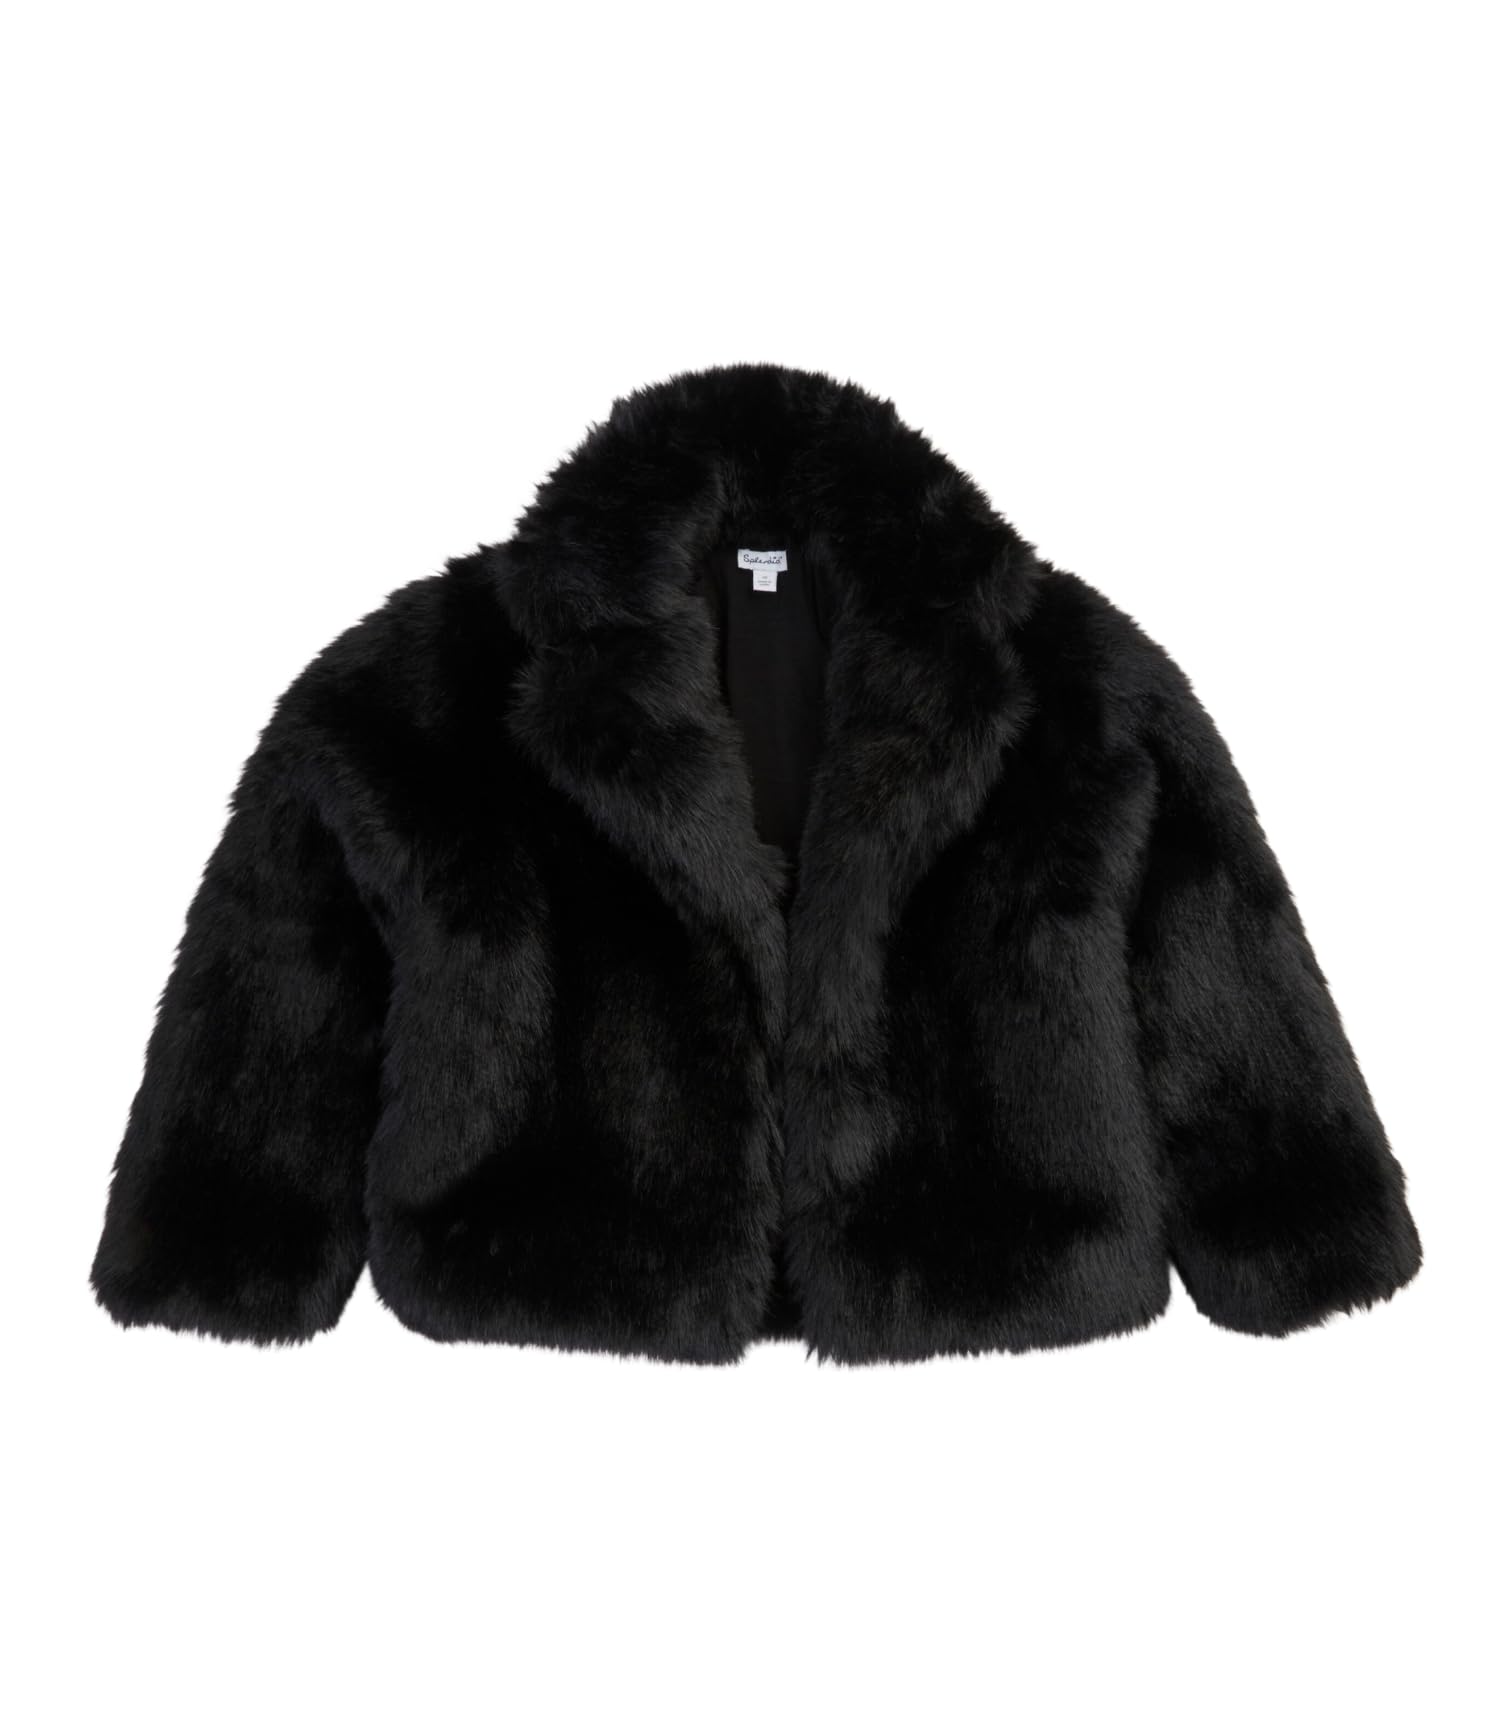 Splendid Girls' Faux Fur Shortly Coat, Black